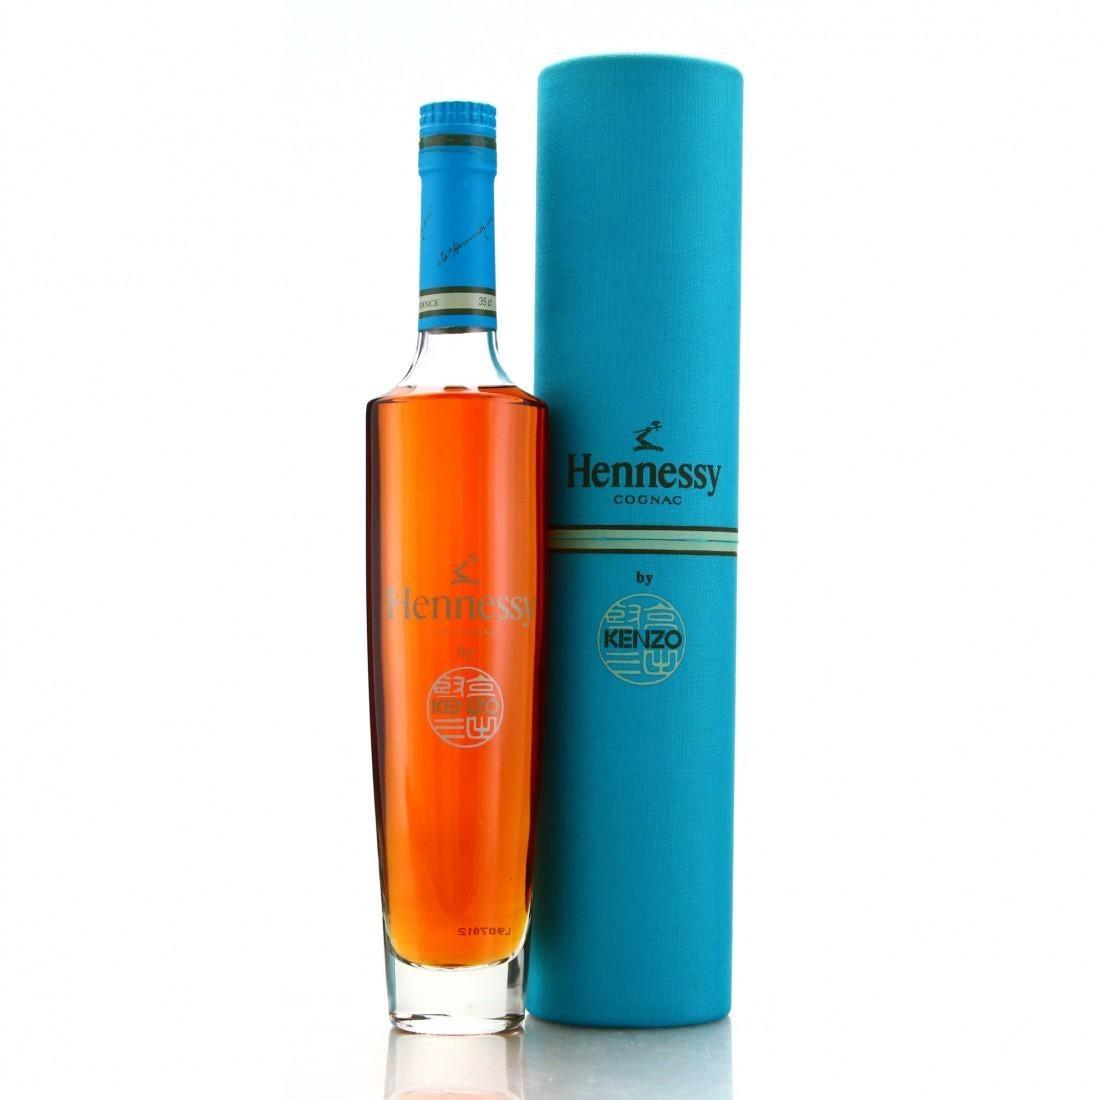 Hennessy kenzo cognac Cognac 700ml